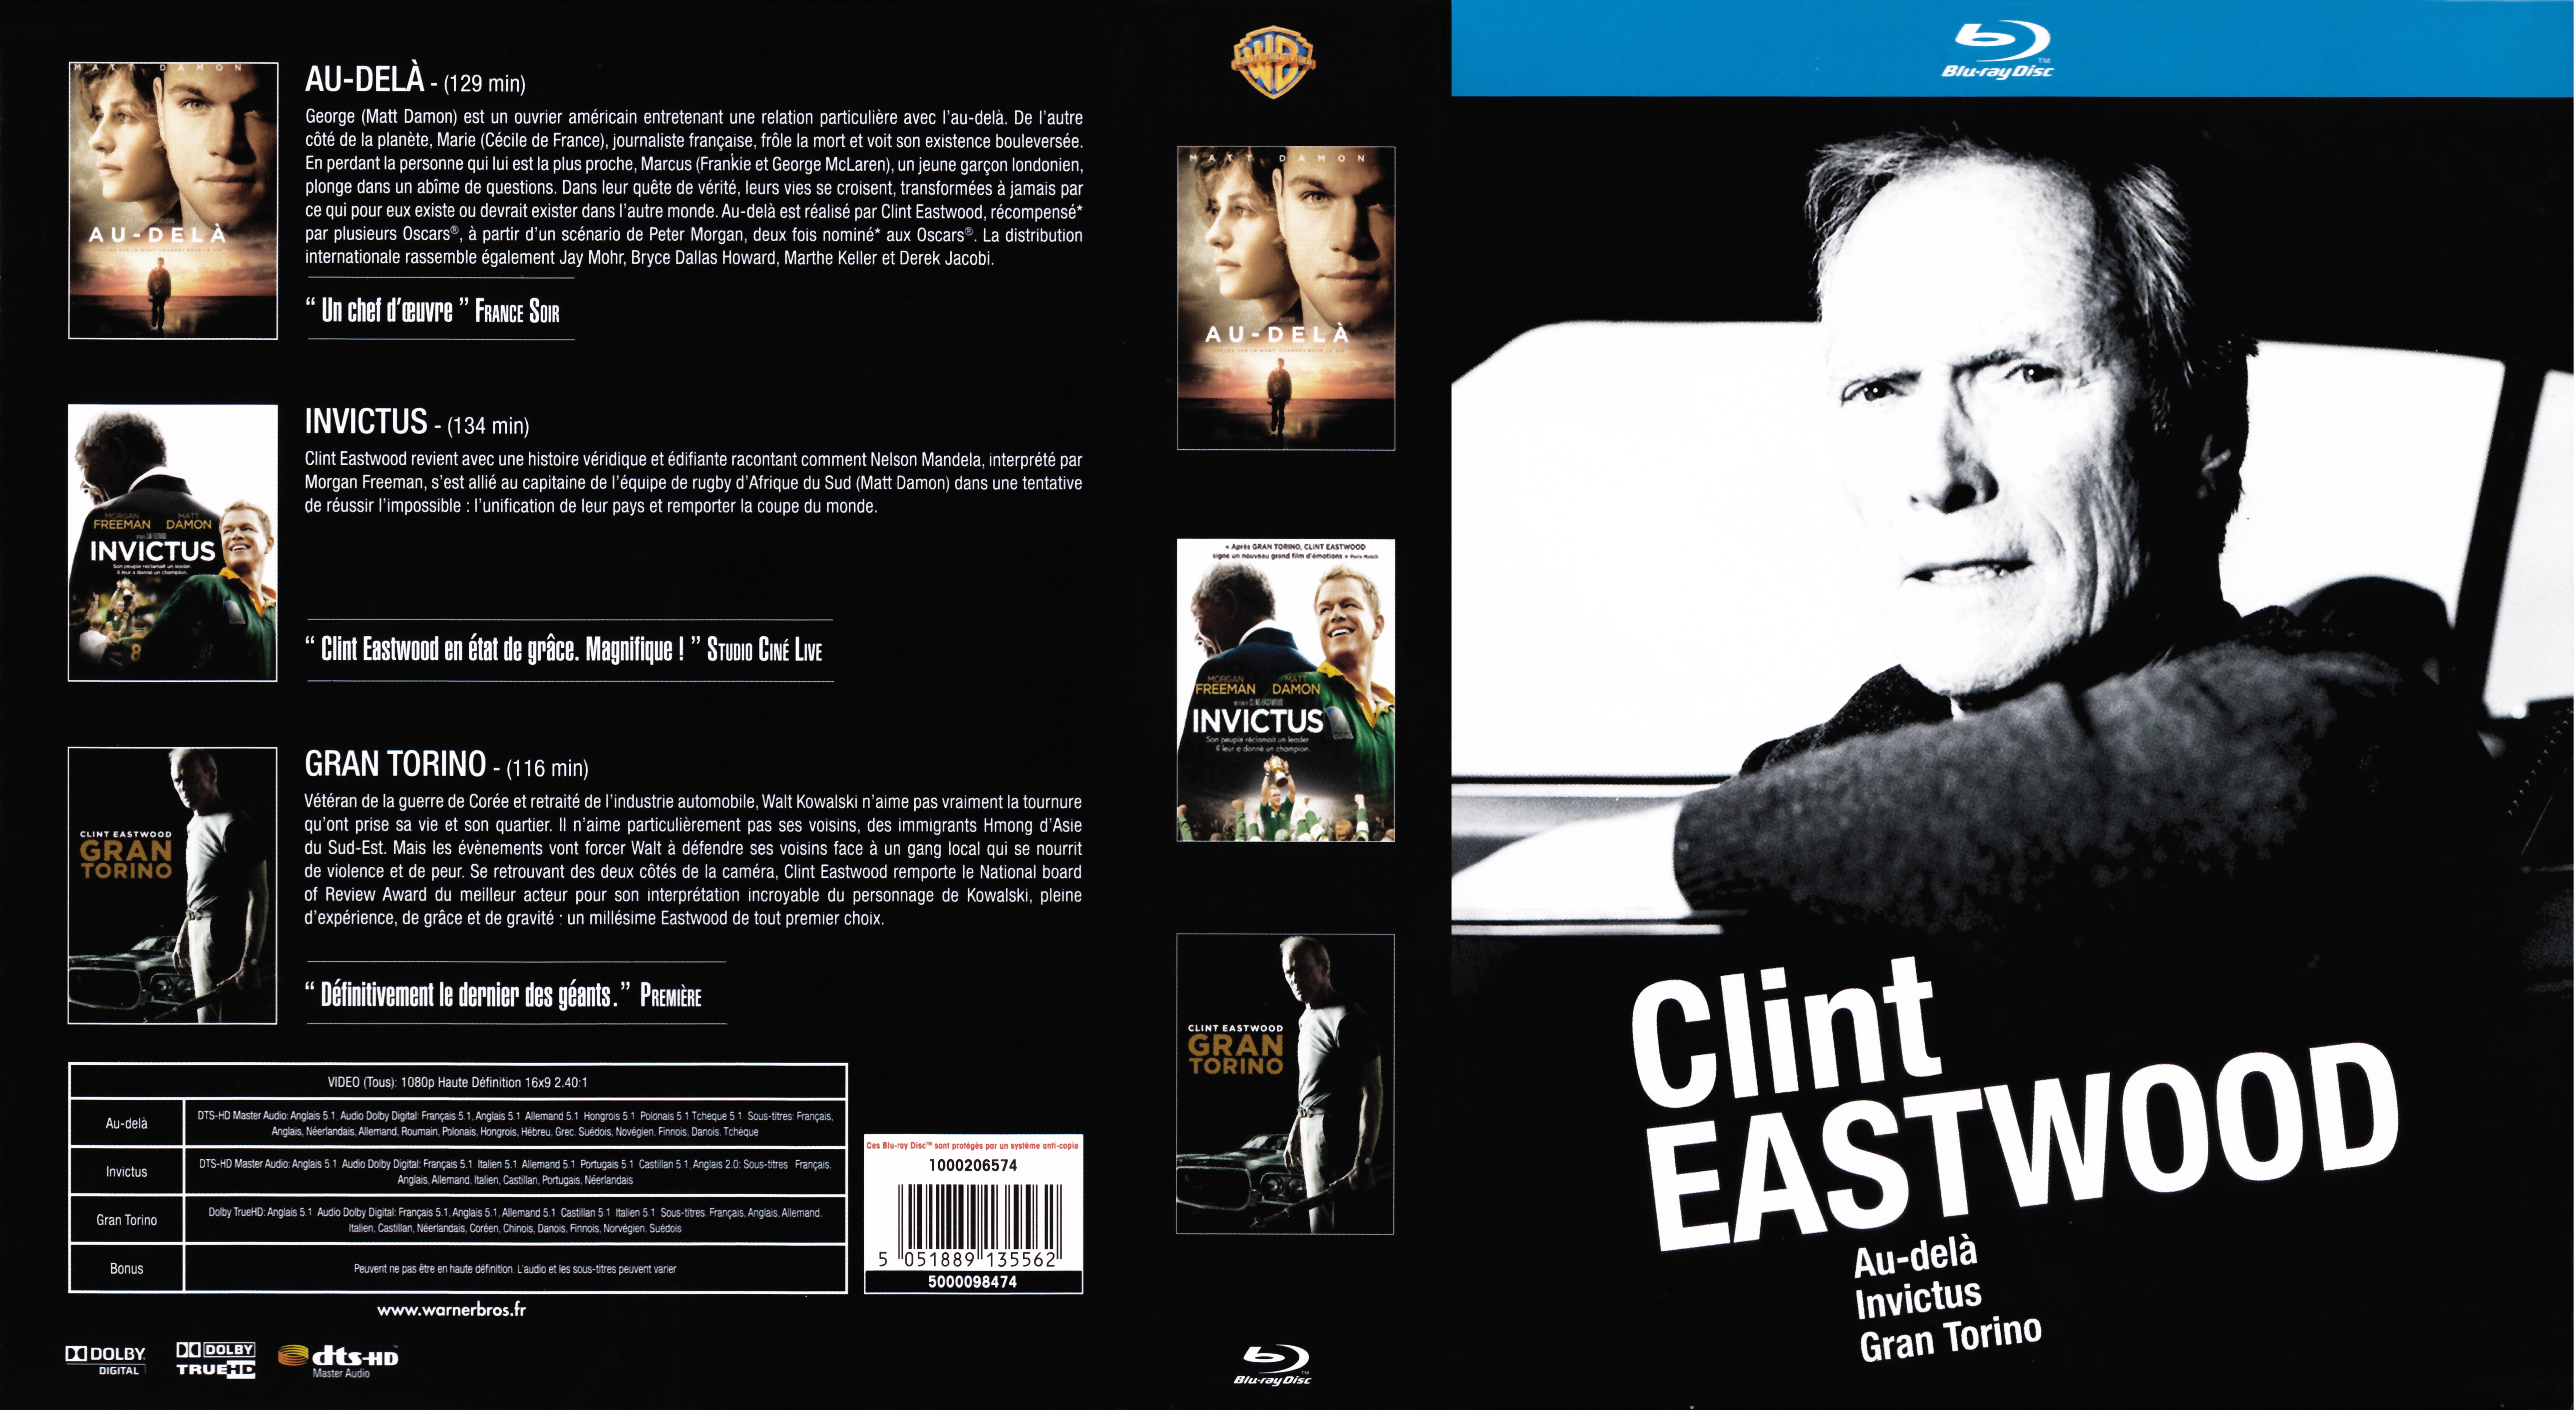 Jaquette DVD Clint Eastwood  Au-dela + Gran torino + Invictus COFFRET (BLU-RAY)